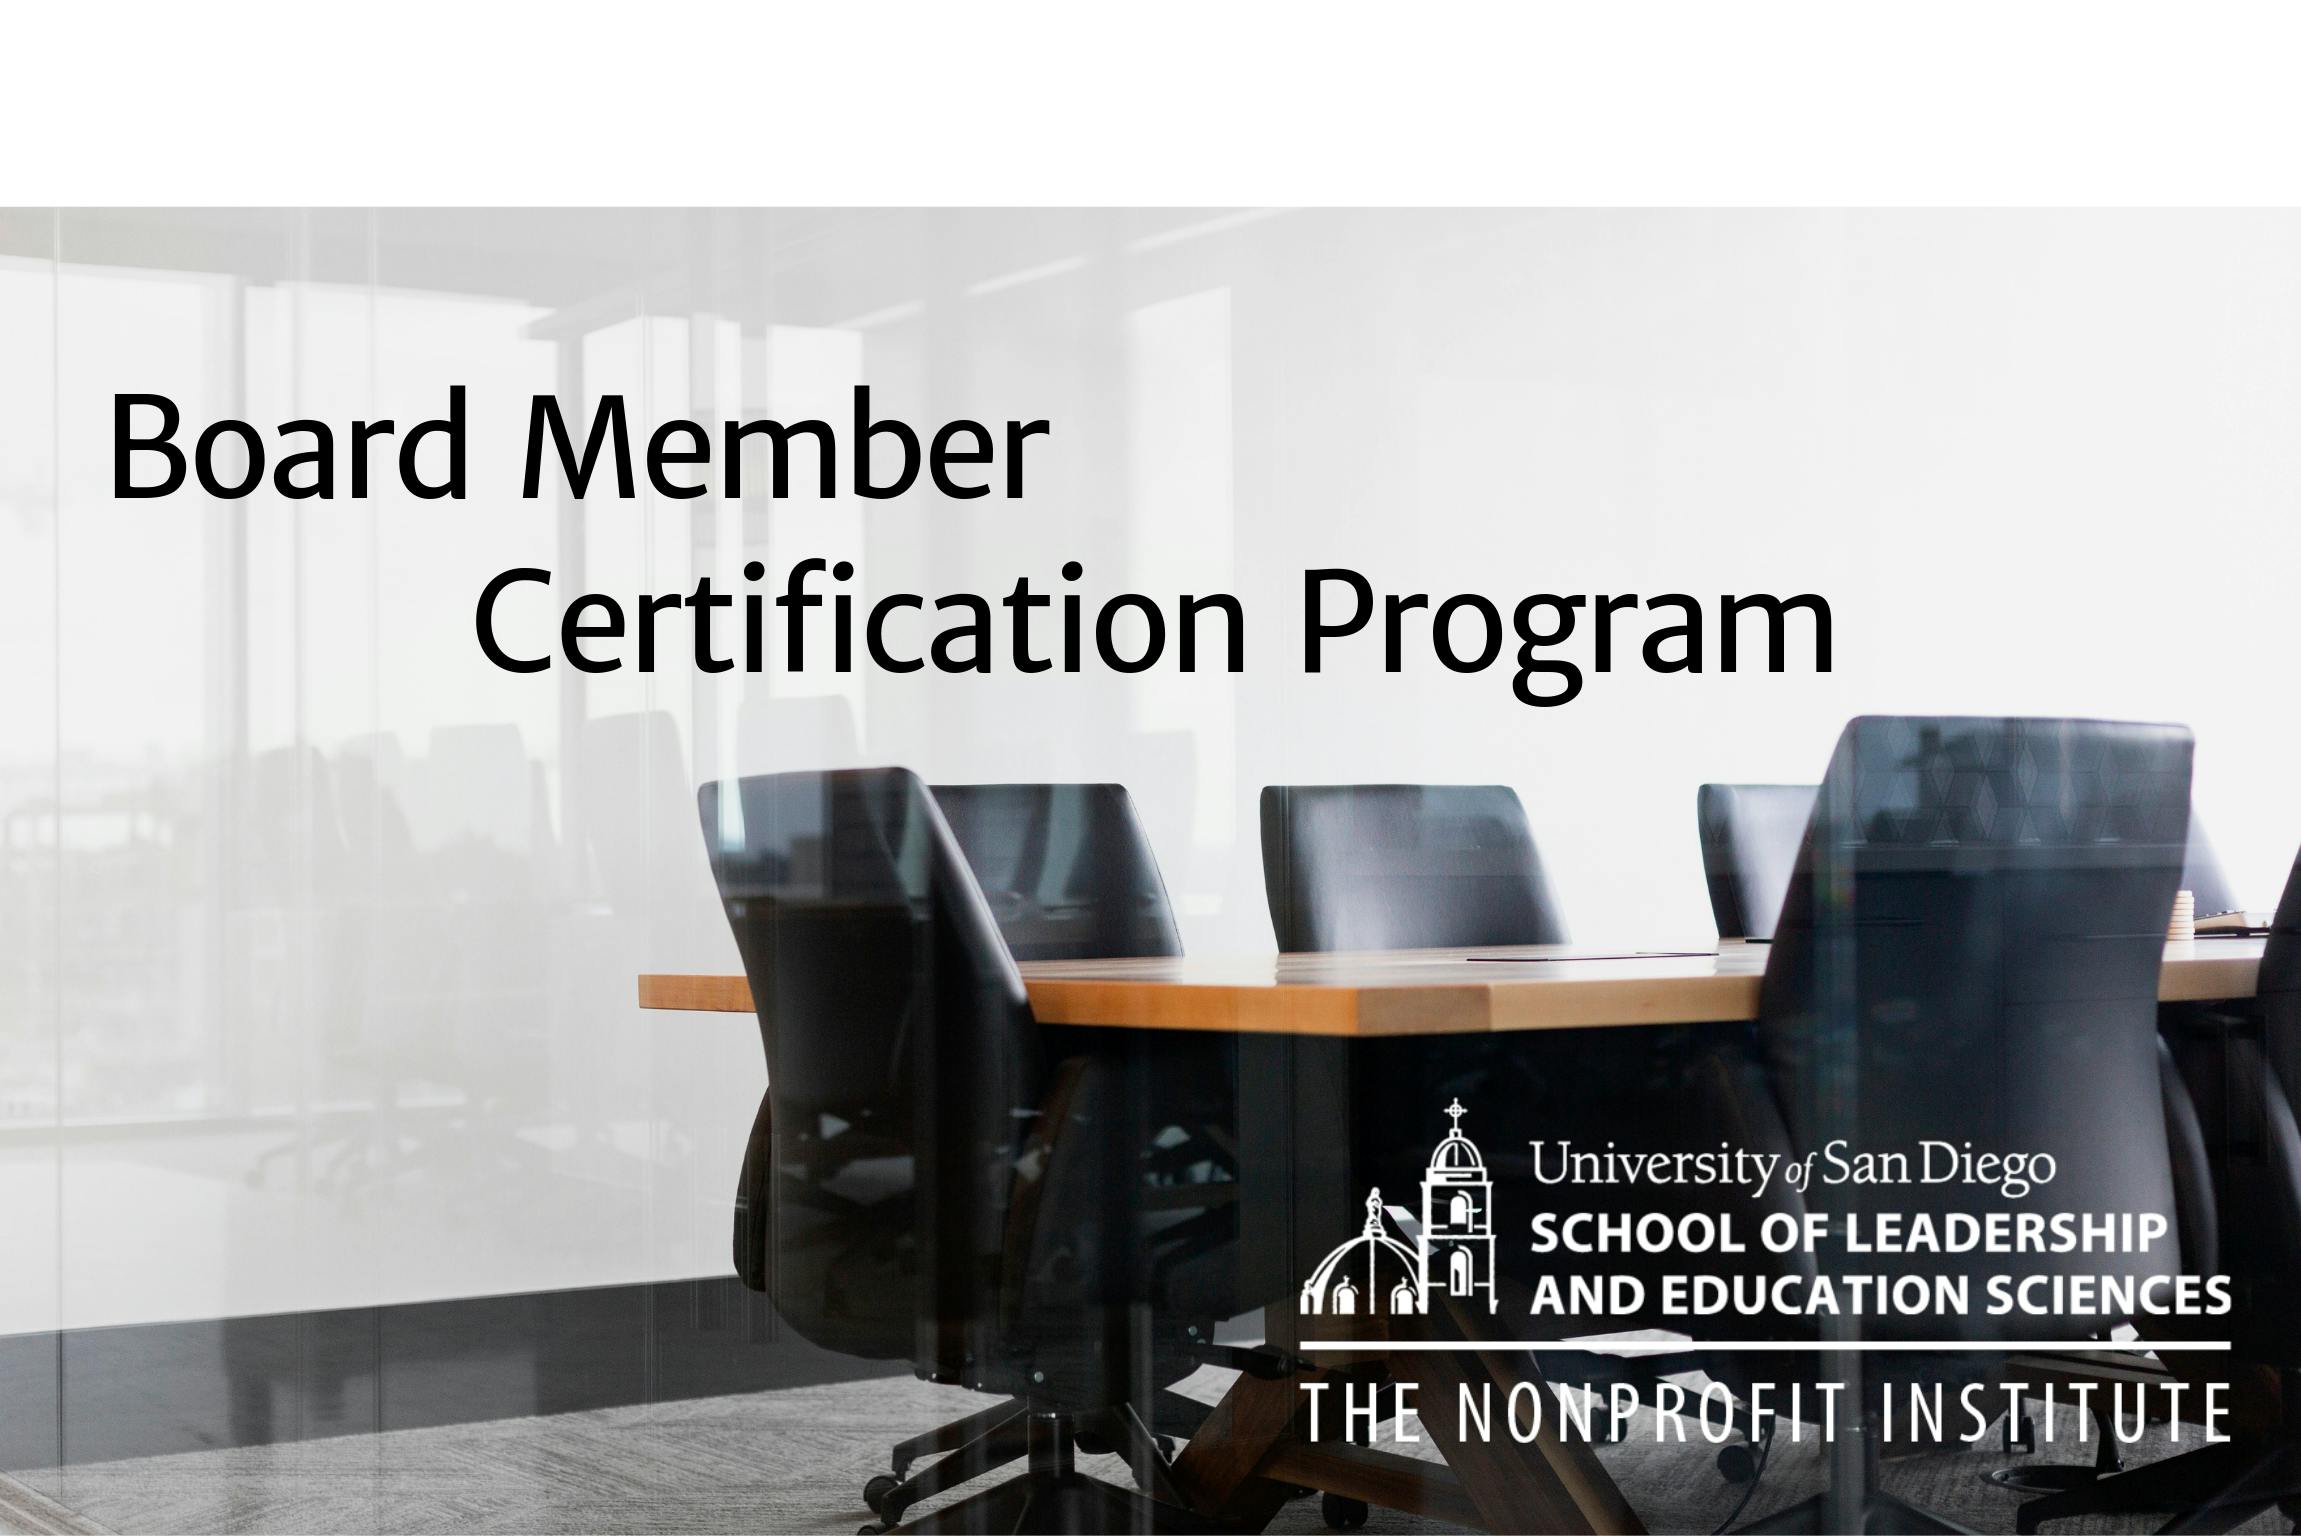 Board Member Certification Program at The Nonprofit Institute